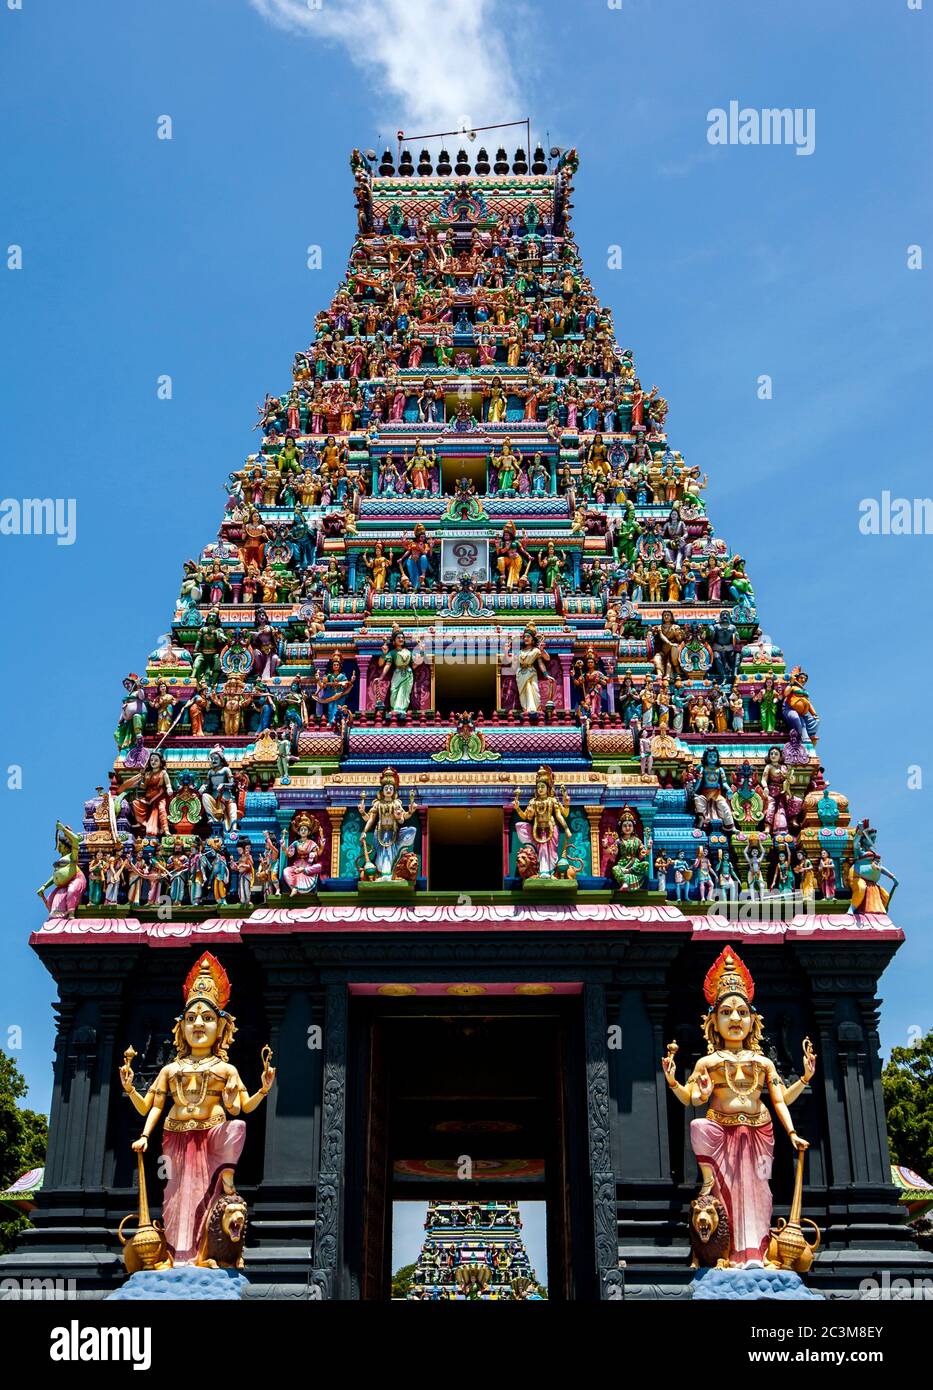 A section of the Naga Pooshani Ambal Kovil on Nainativu Island in the Jaffna region of Sri Lanka. The temple is dedicated to the Hindu goddess Ambal. Stock Photo